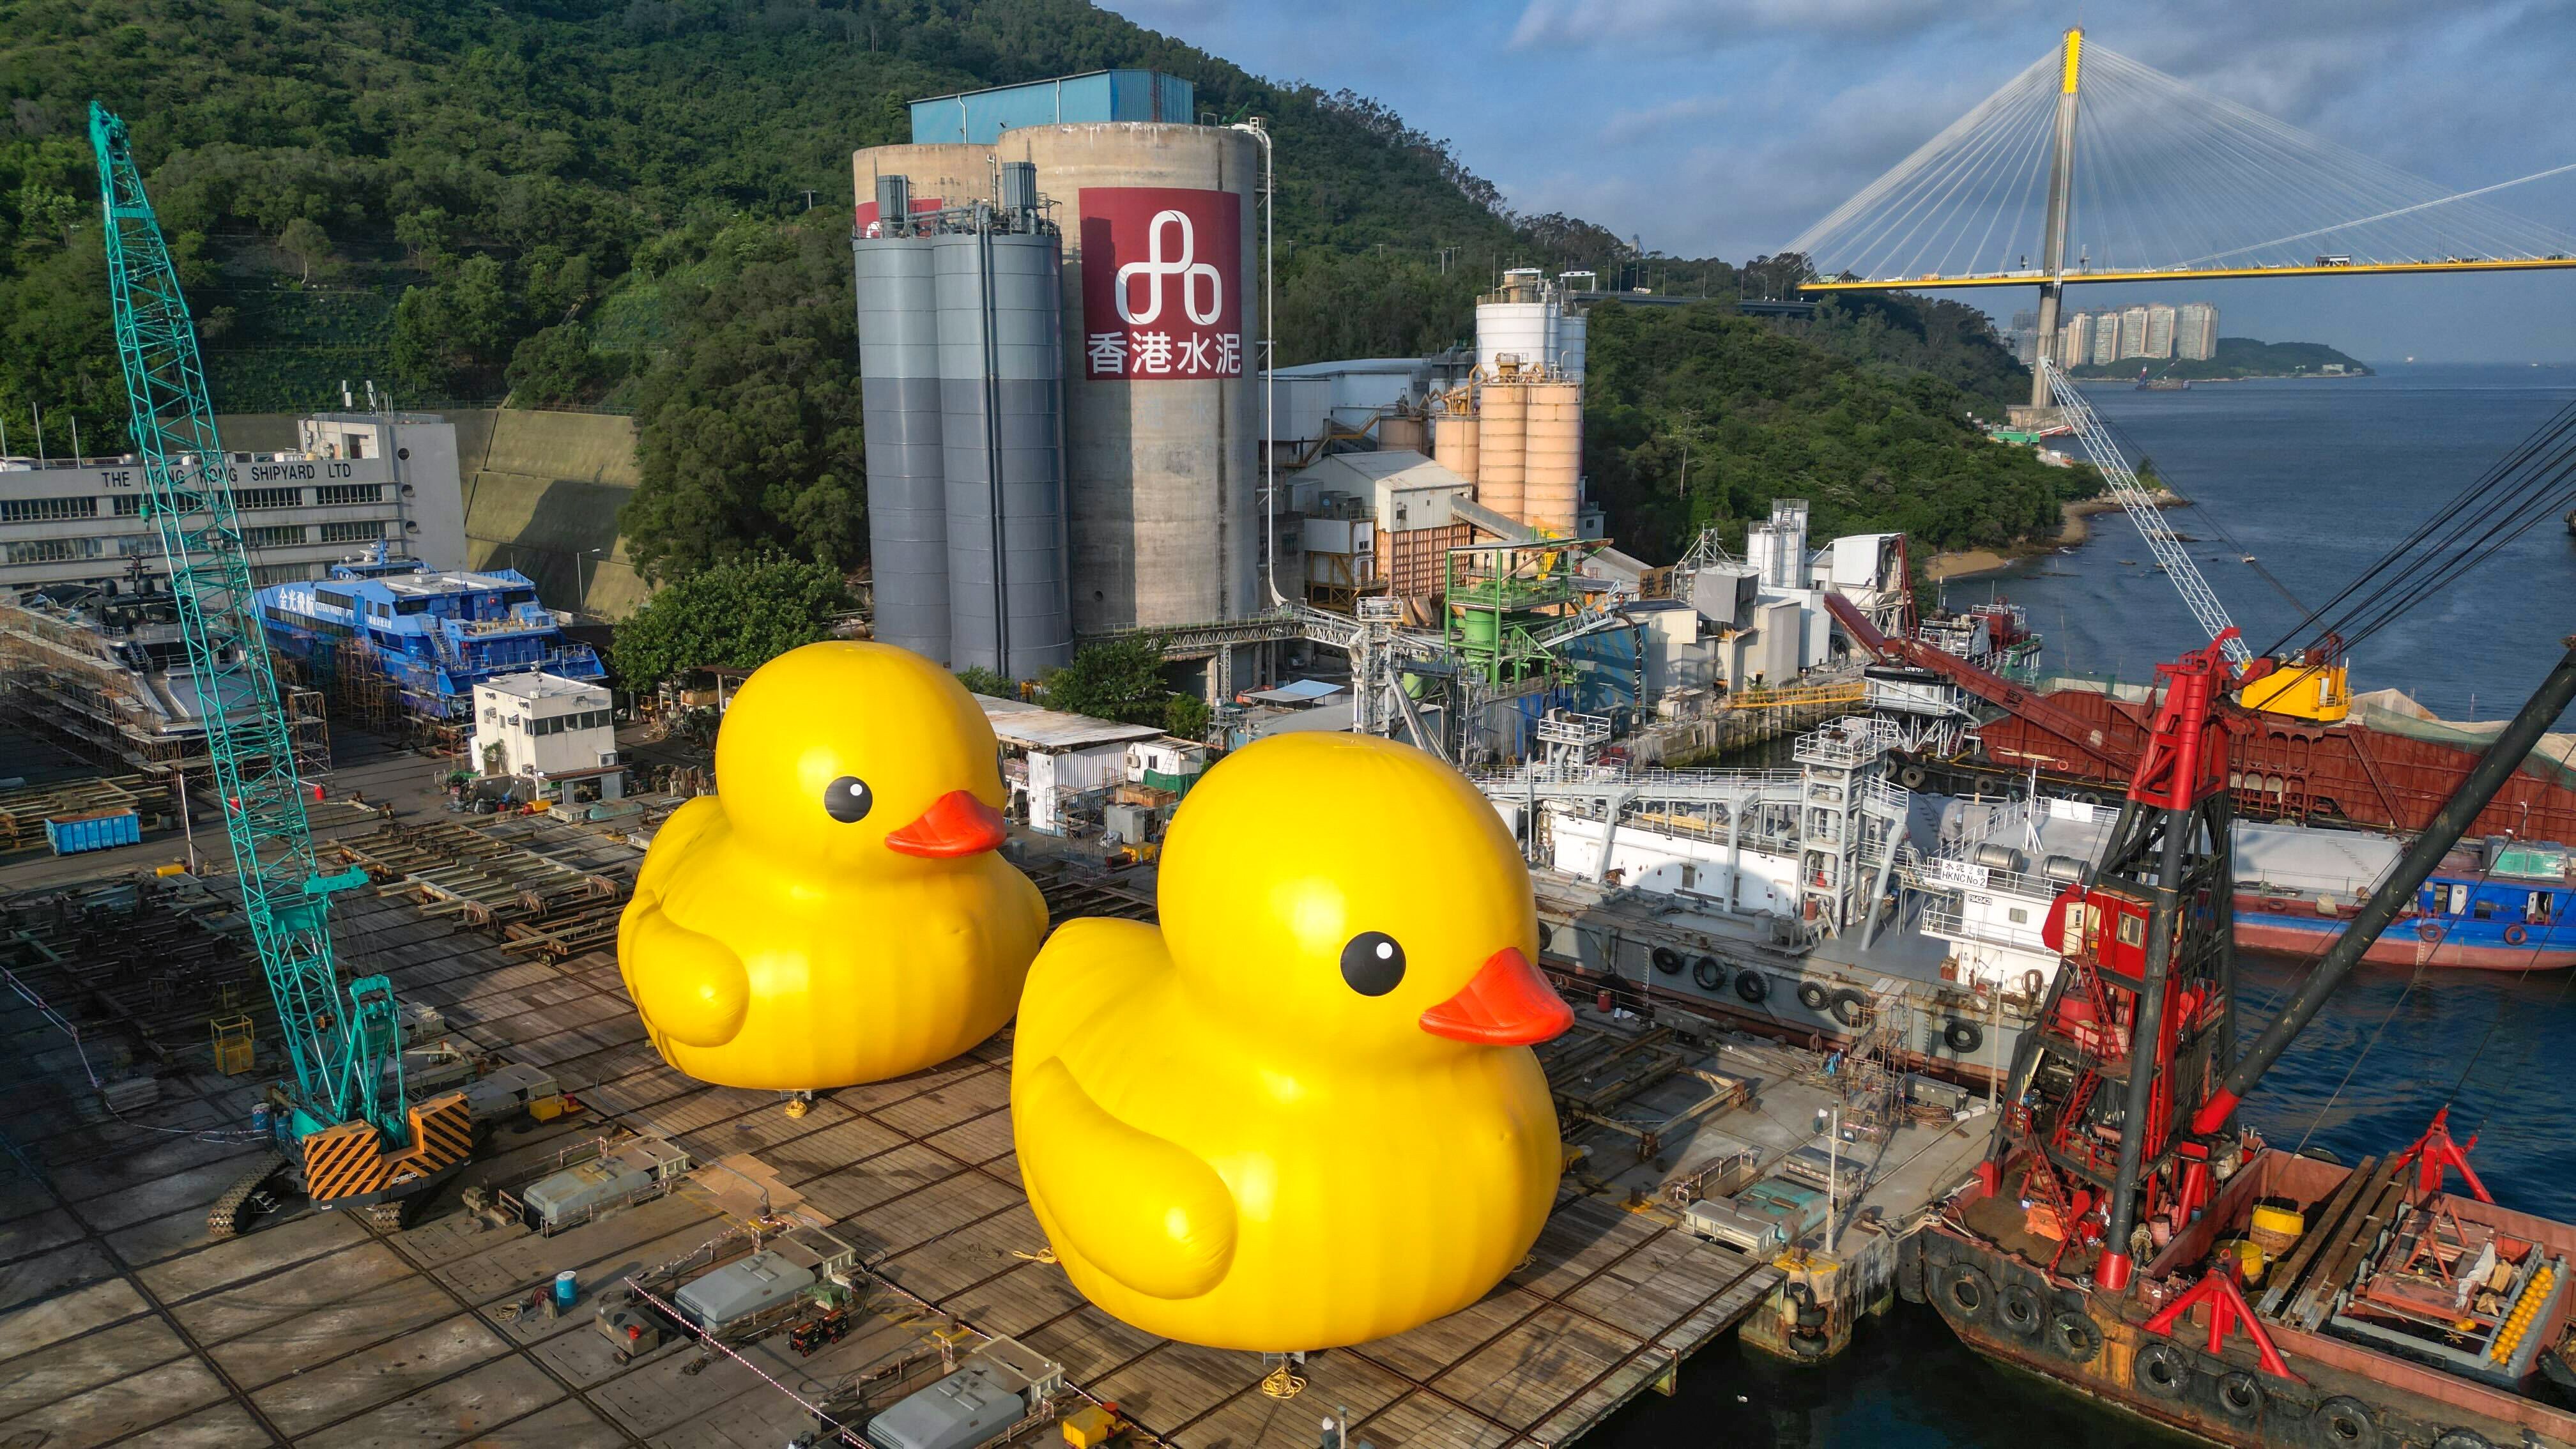 Two giant rubber ducks are being inflated at a dock in Hong Kong Shipyard at Tsing Yi. Photo: Sam Tsang